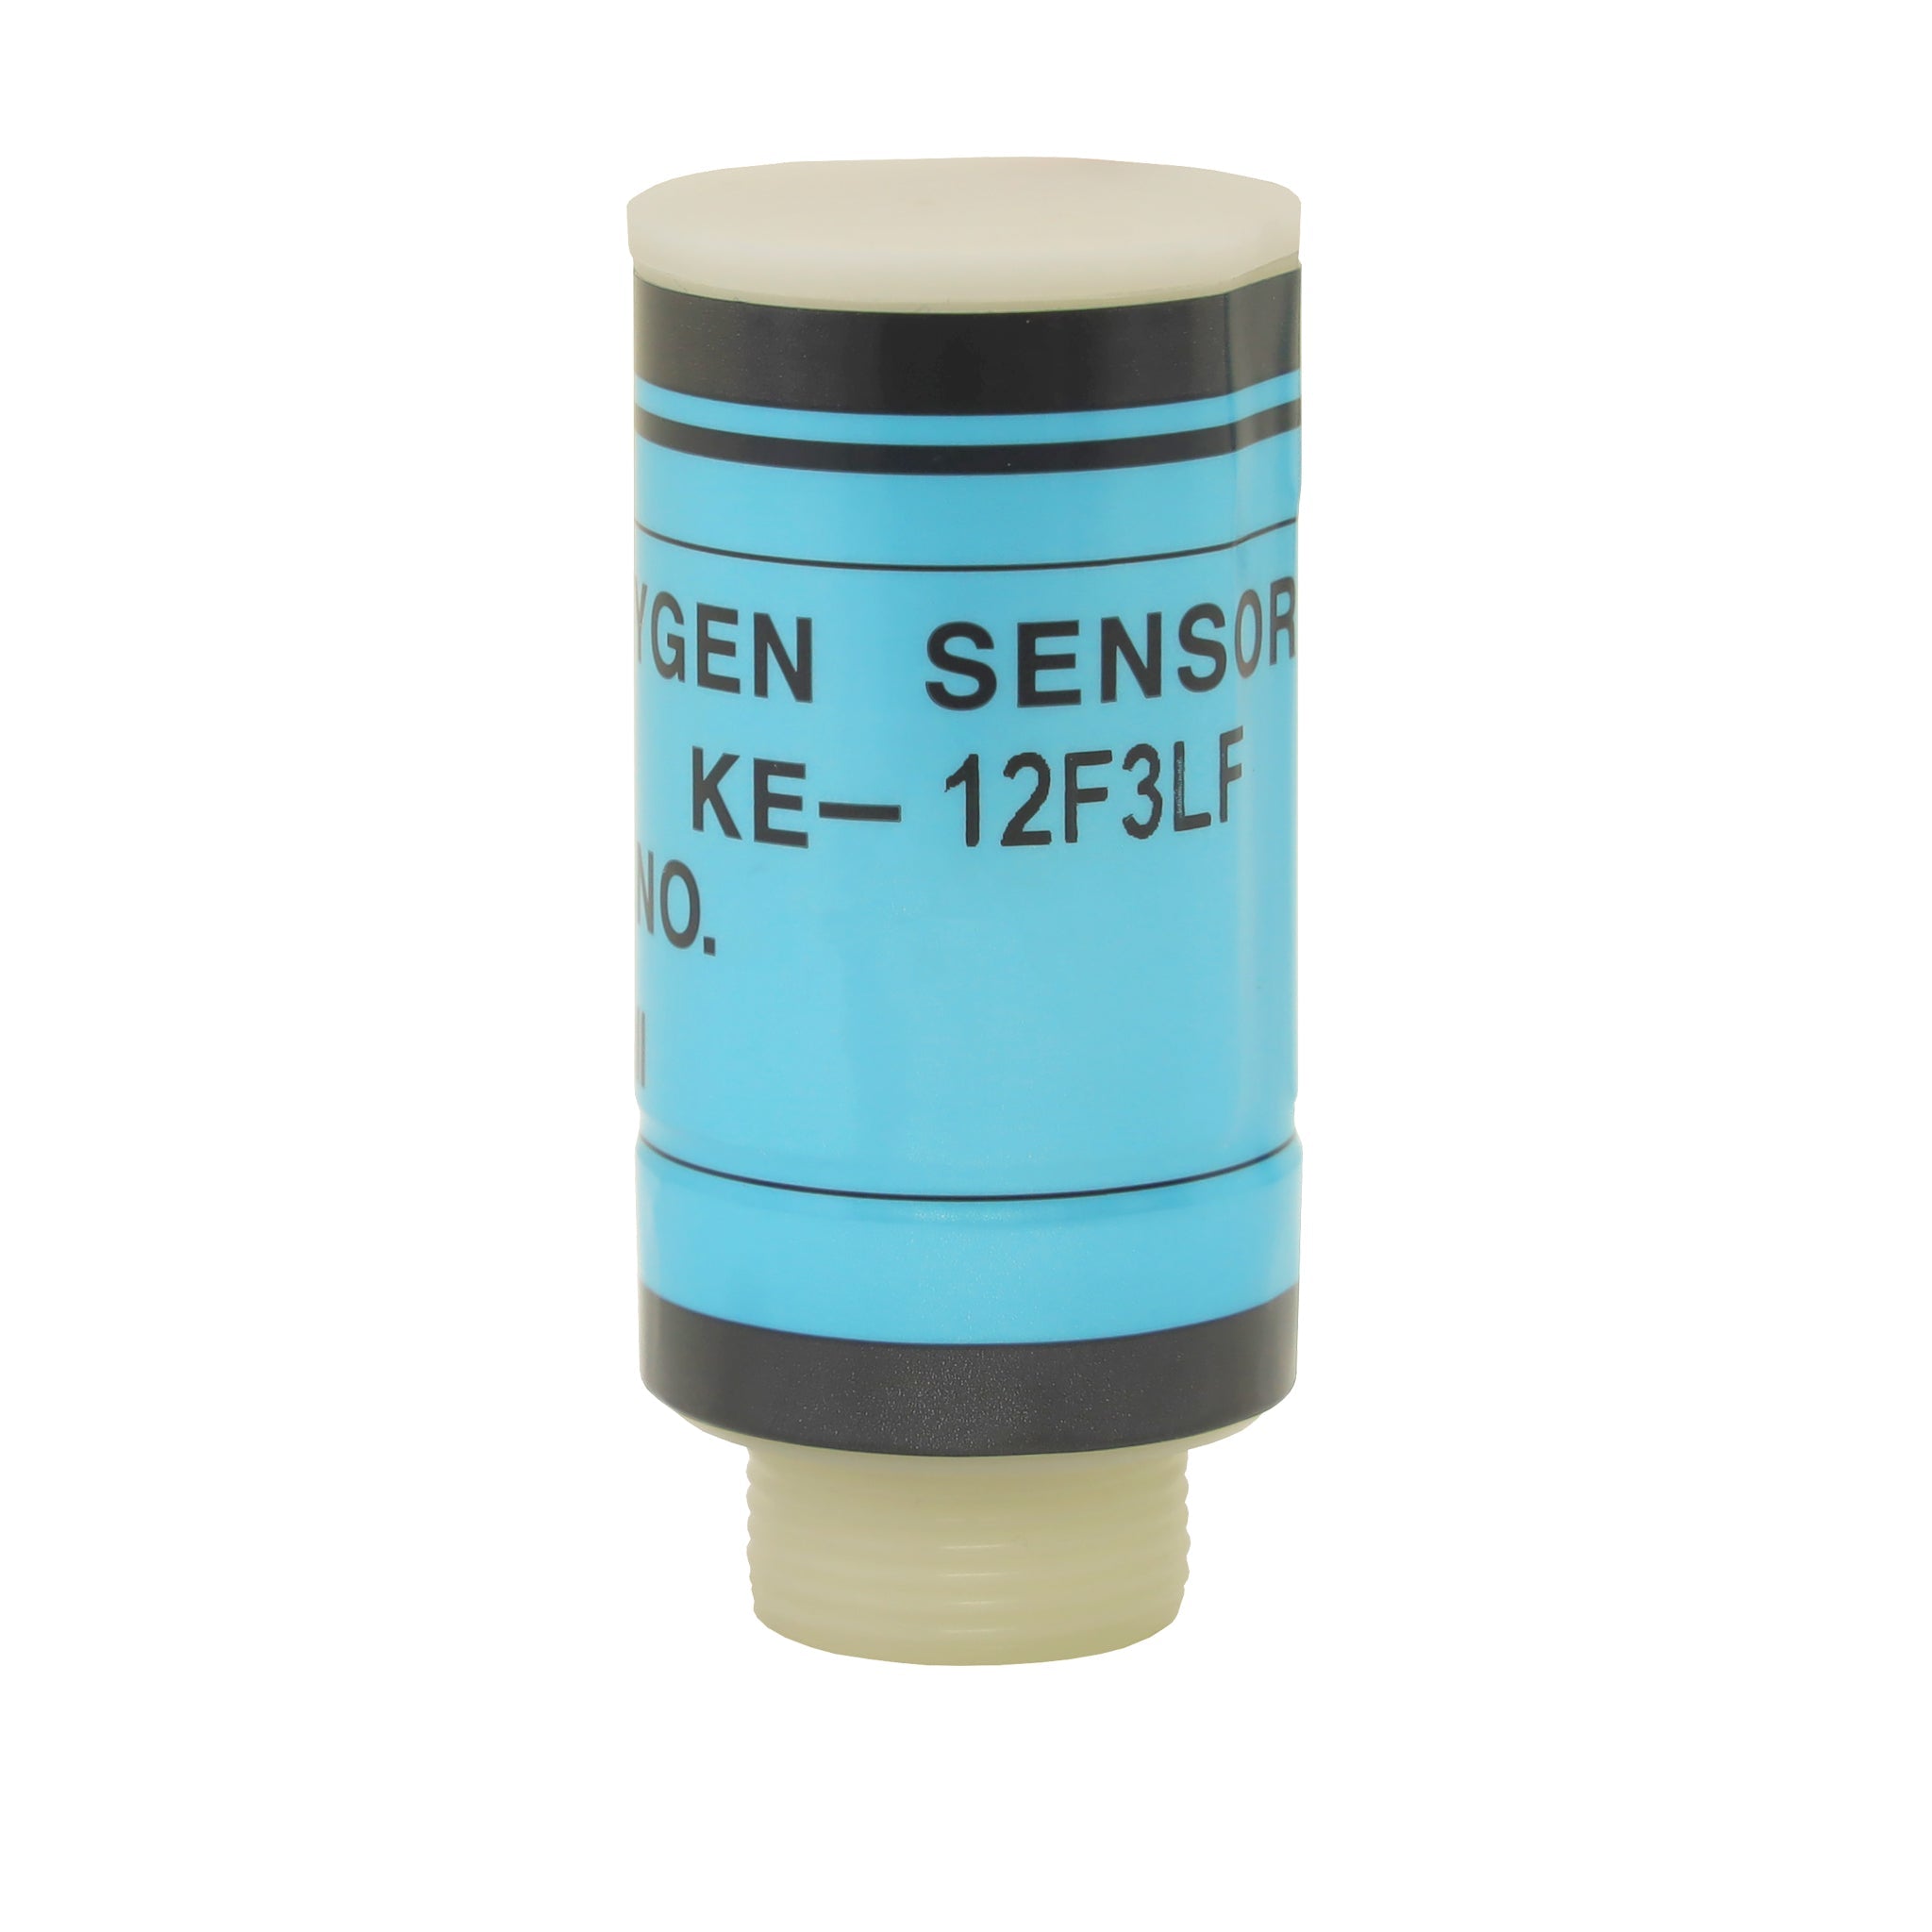 KE-12F3LF Lead-Free Oxygen Sensor